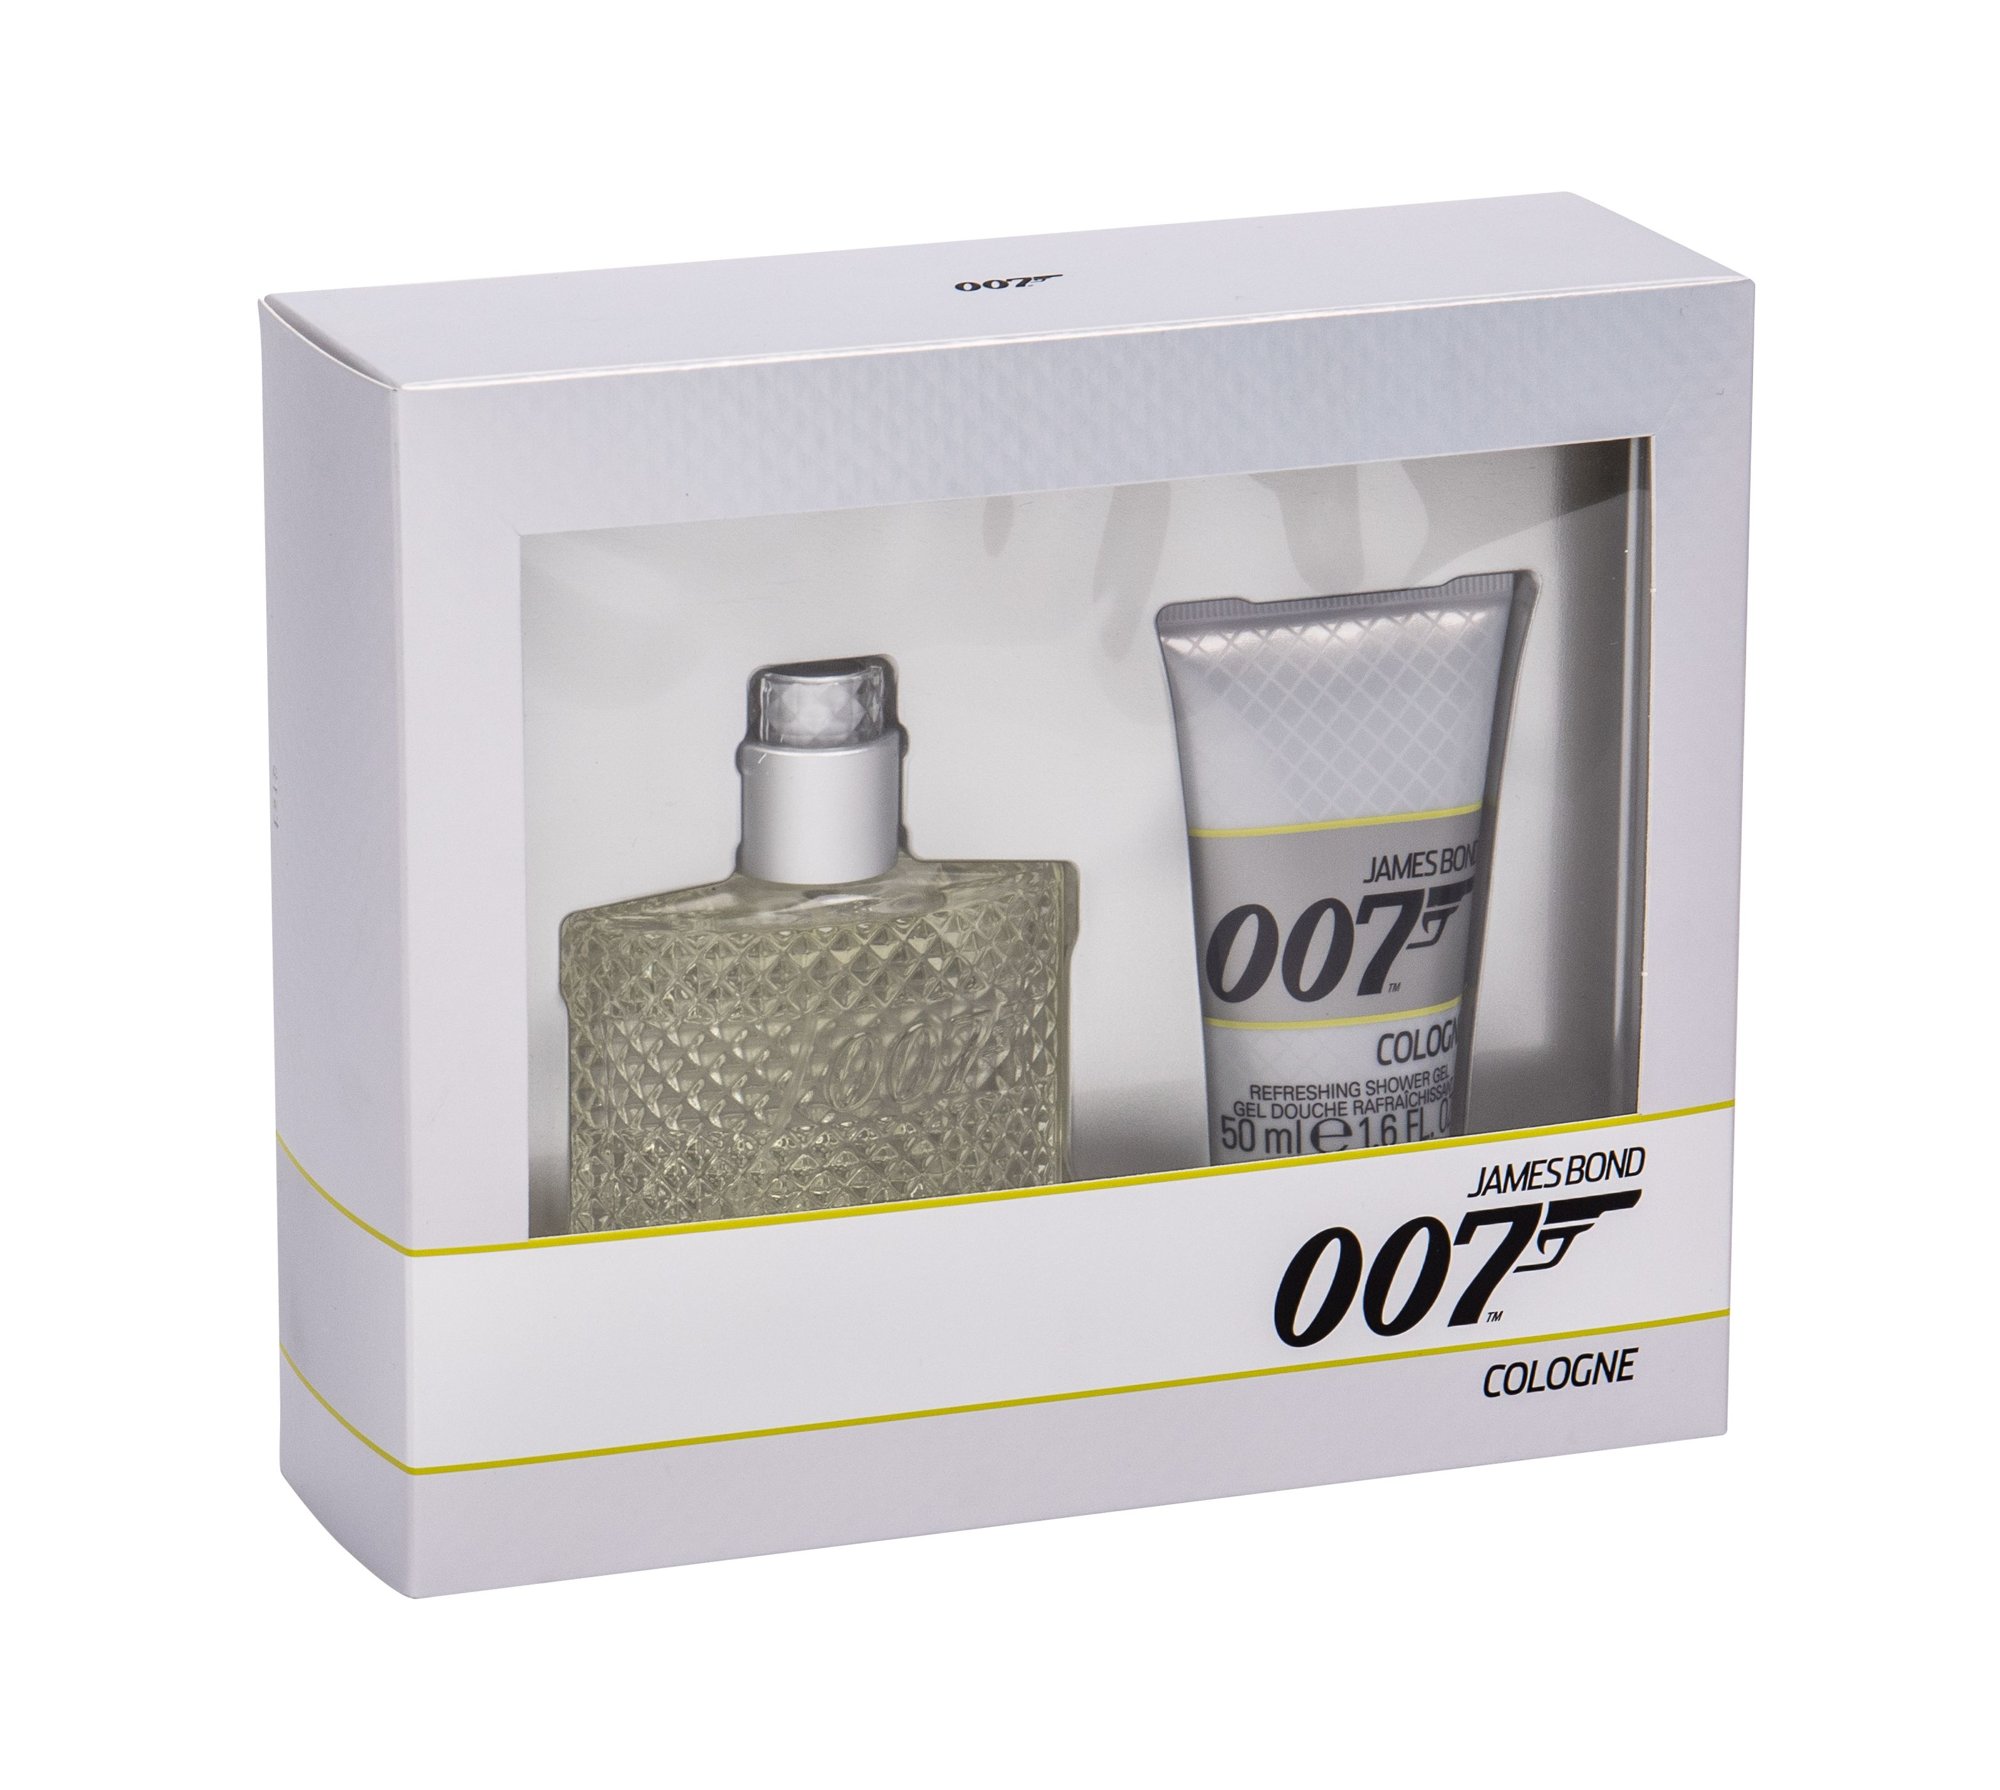 James Bond 007 James Bond 007 Cologne 30ml Cologne 30 ml + Shower Gel 50 ml Kvepalai Vyrams Cologne Rinkinys